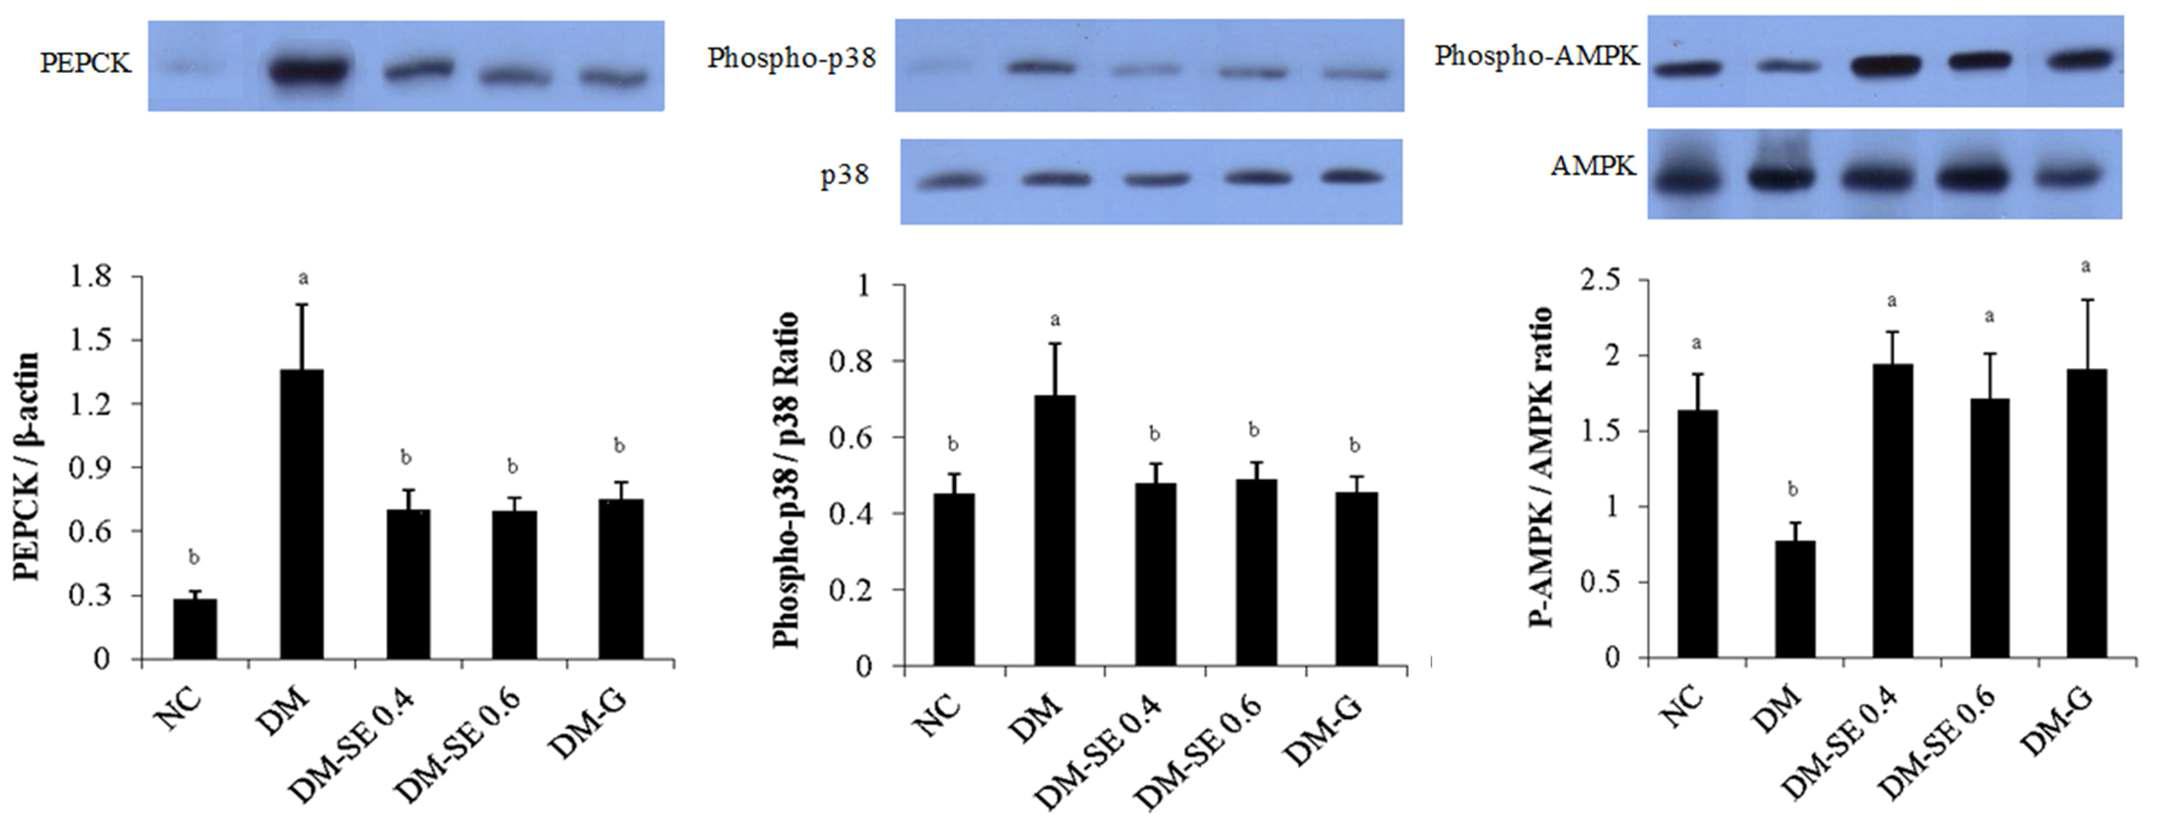 Expression of PEPCK , phosphor-p38/p38 ratio and p-AMPK/AMPK ratio.